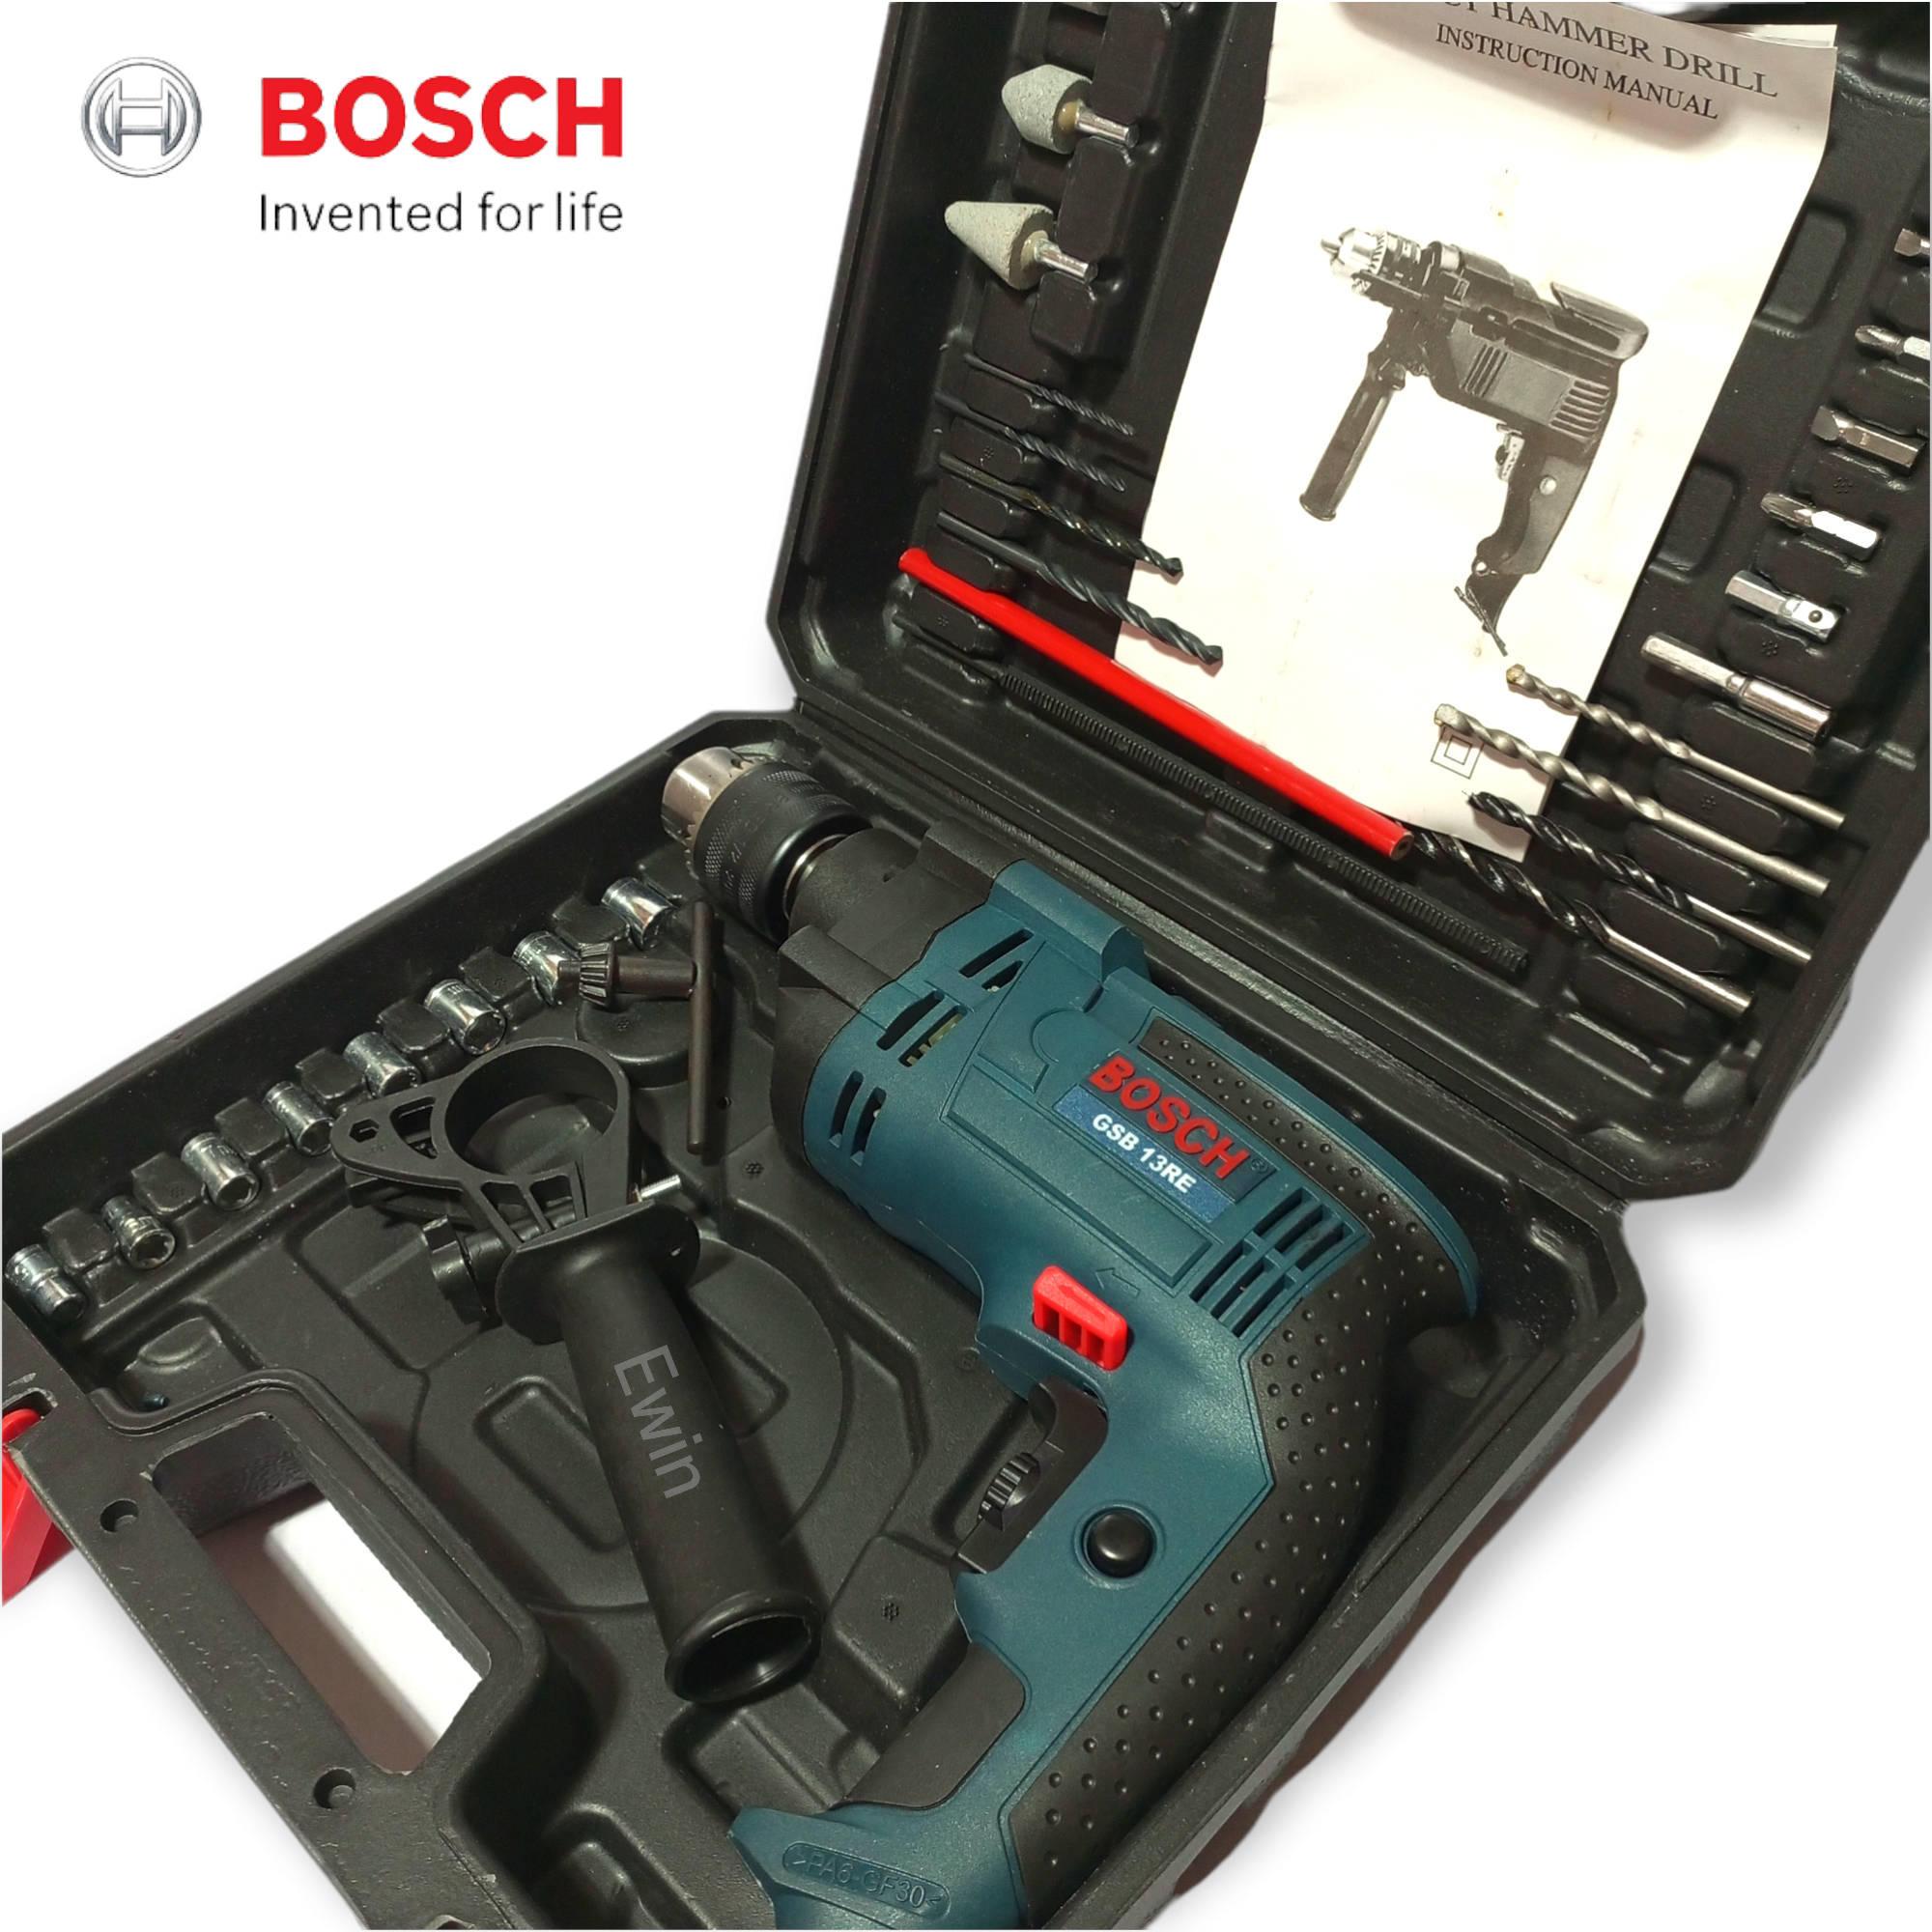 impact drill Bosch heavy duty industrial tools